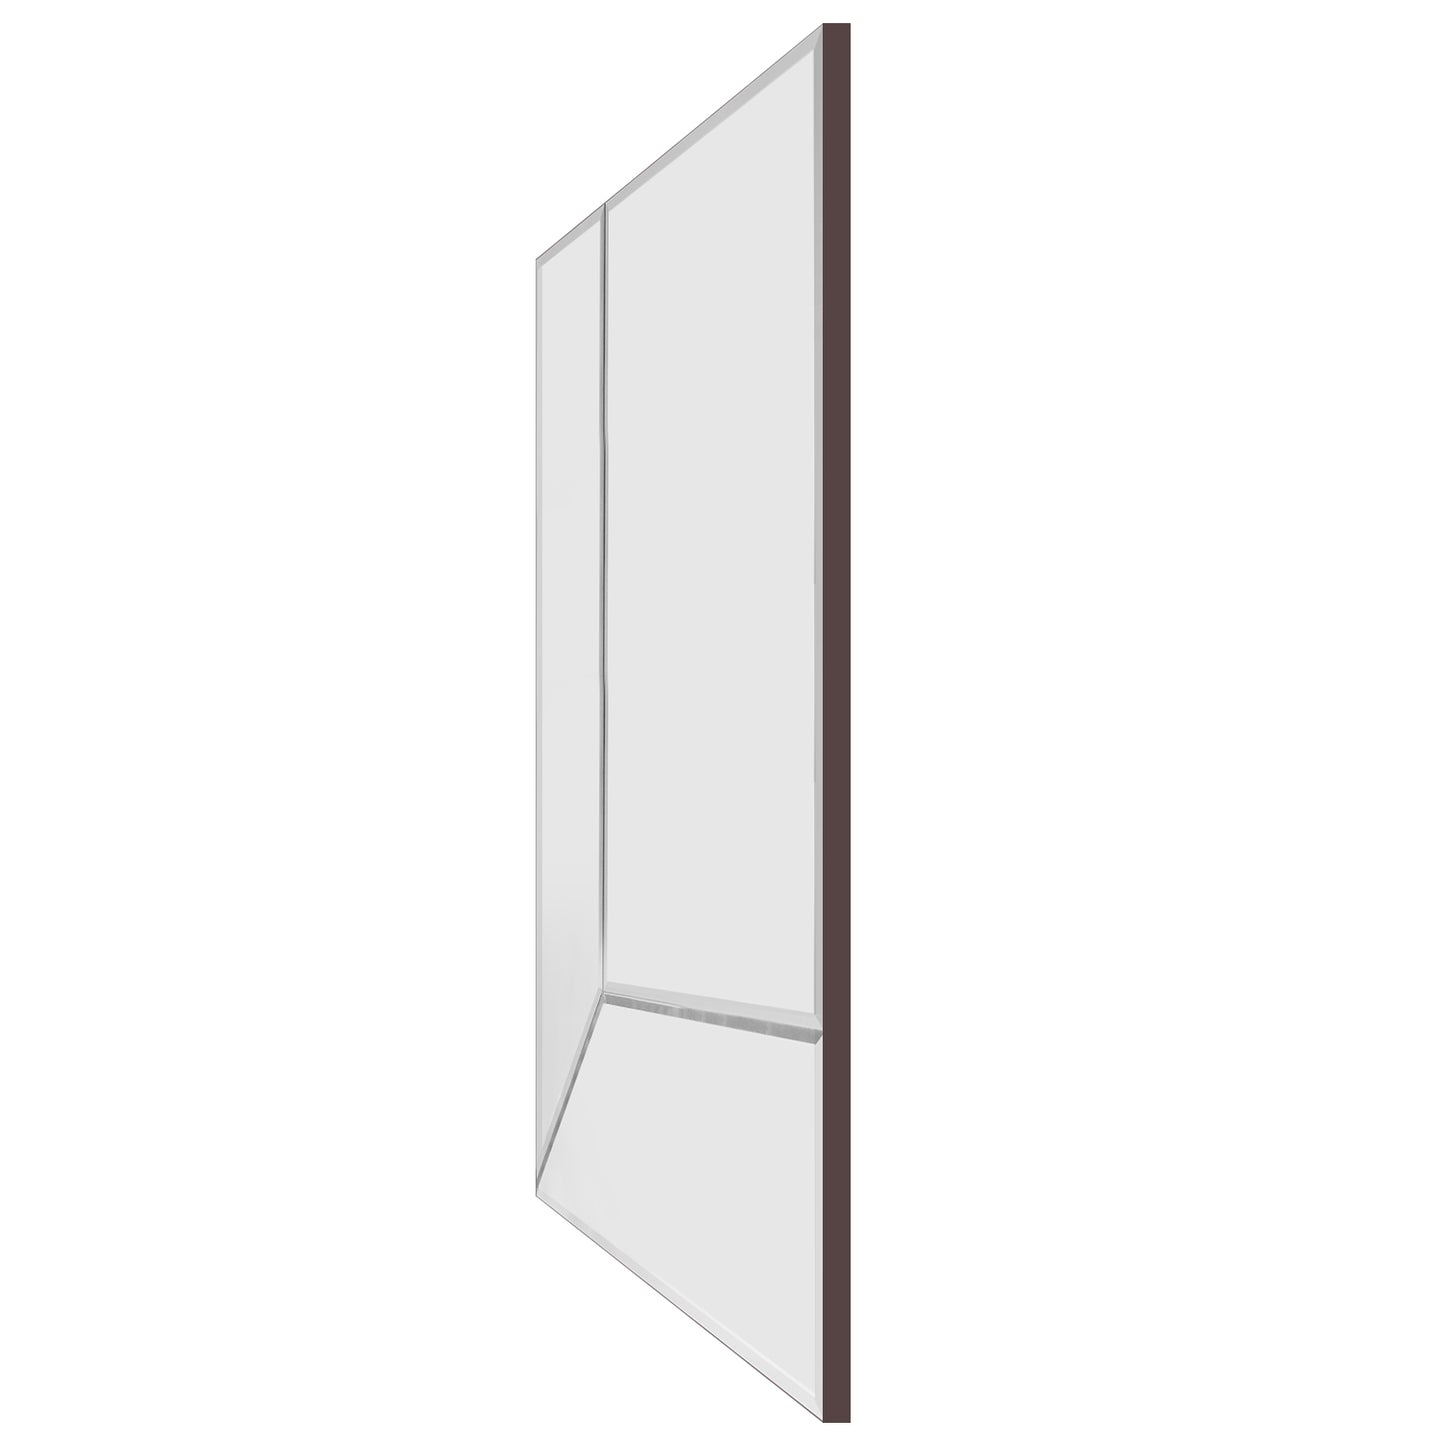 Reversible Rectangle XL - Mirror - Reversible - Beveled Mirror - Contemporary Wall Art